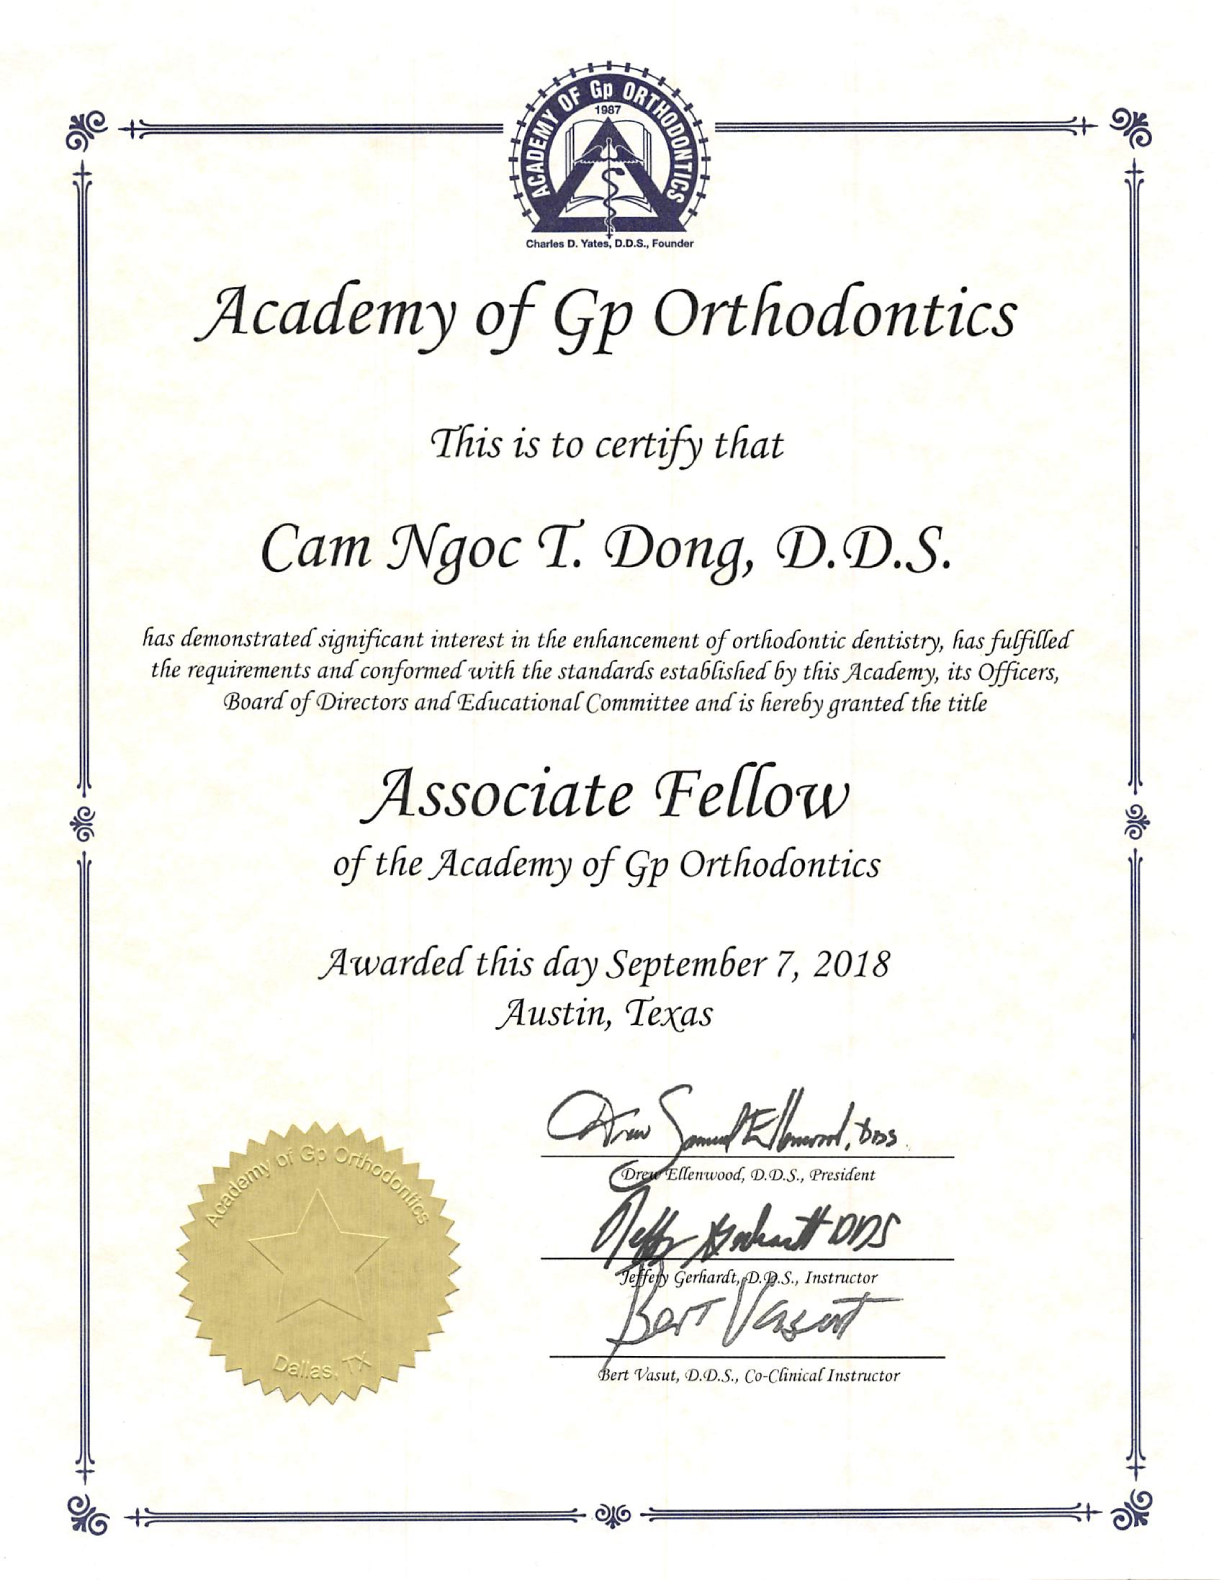 Academy of GP Orthodontics associate fellow